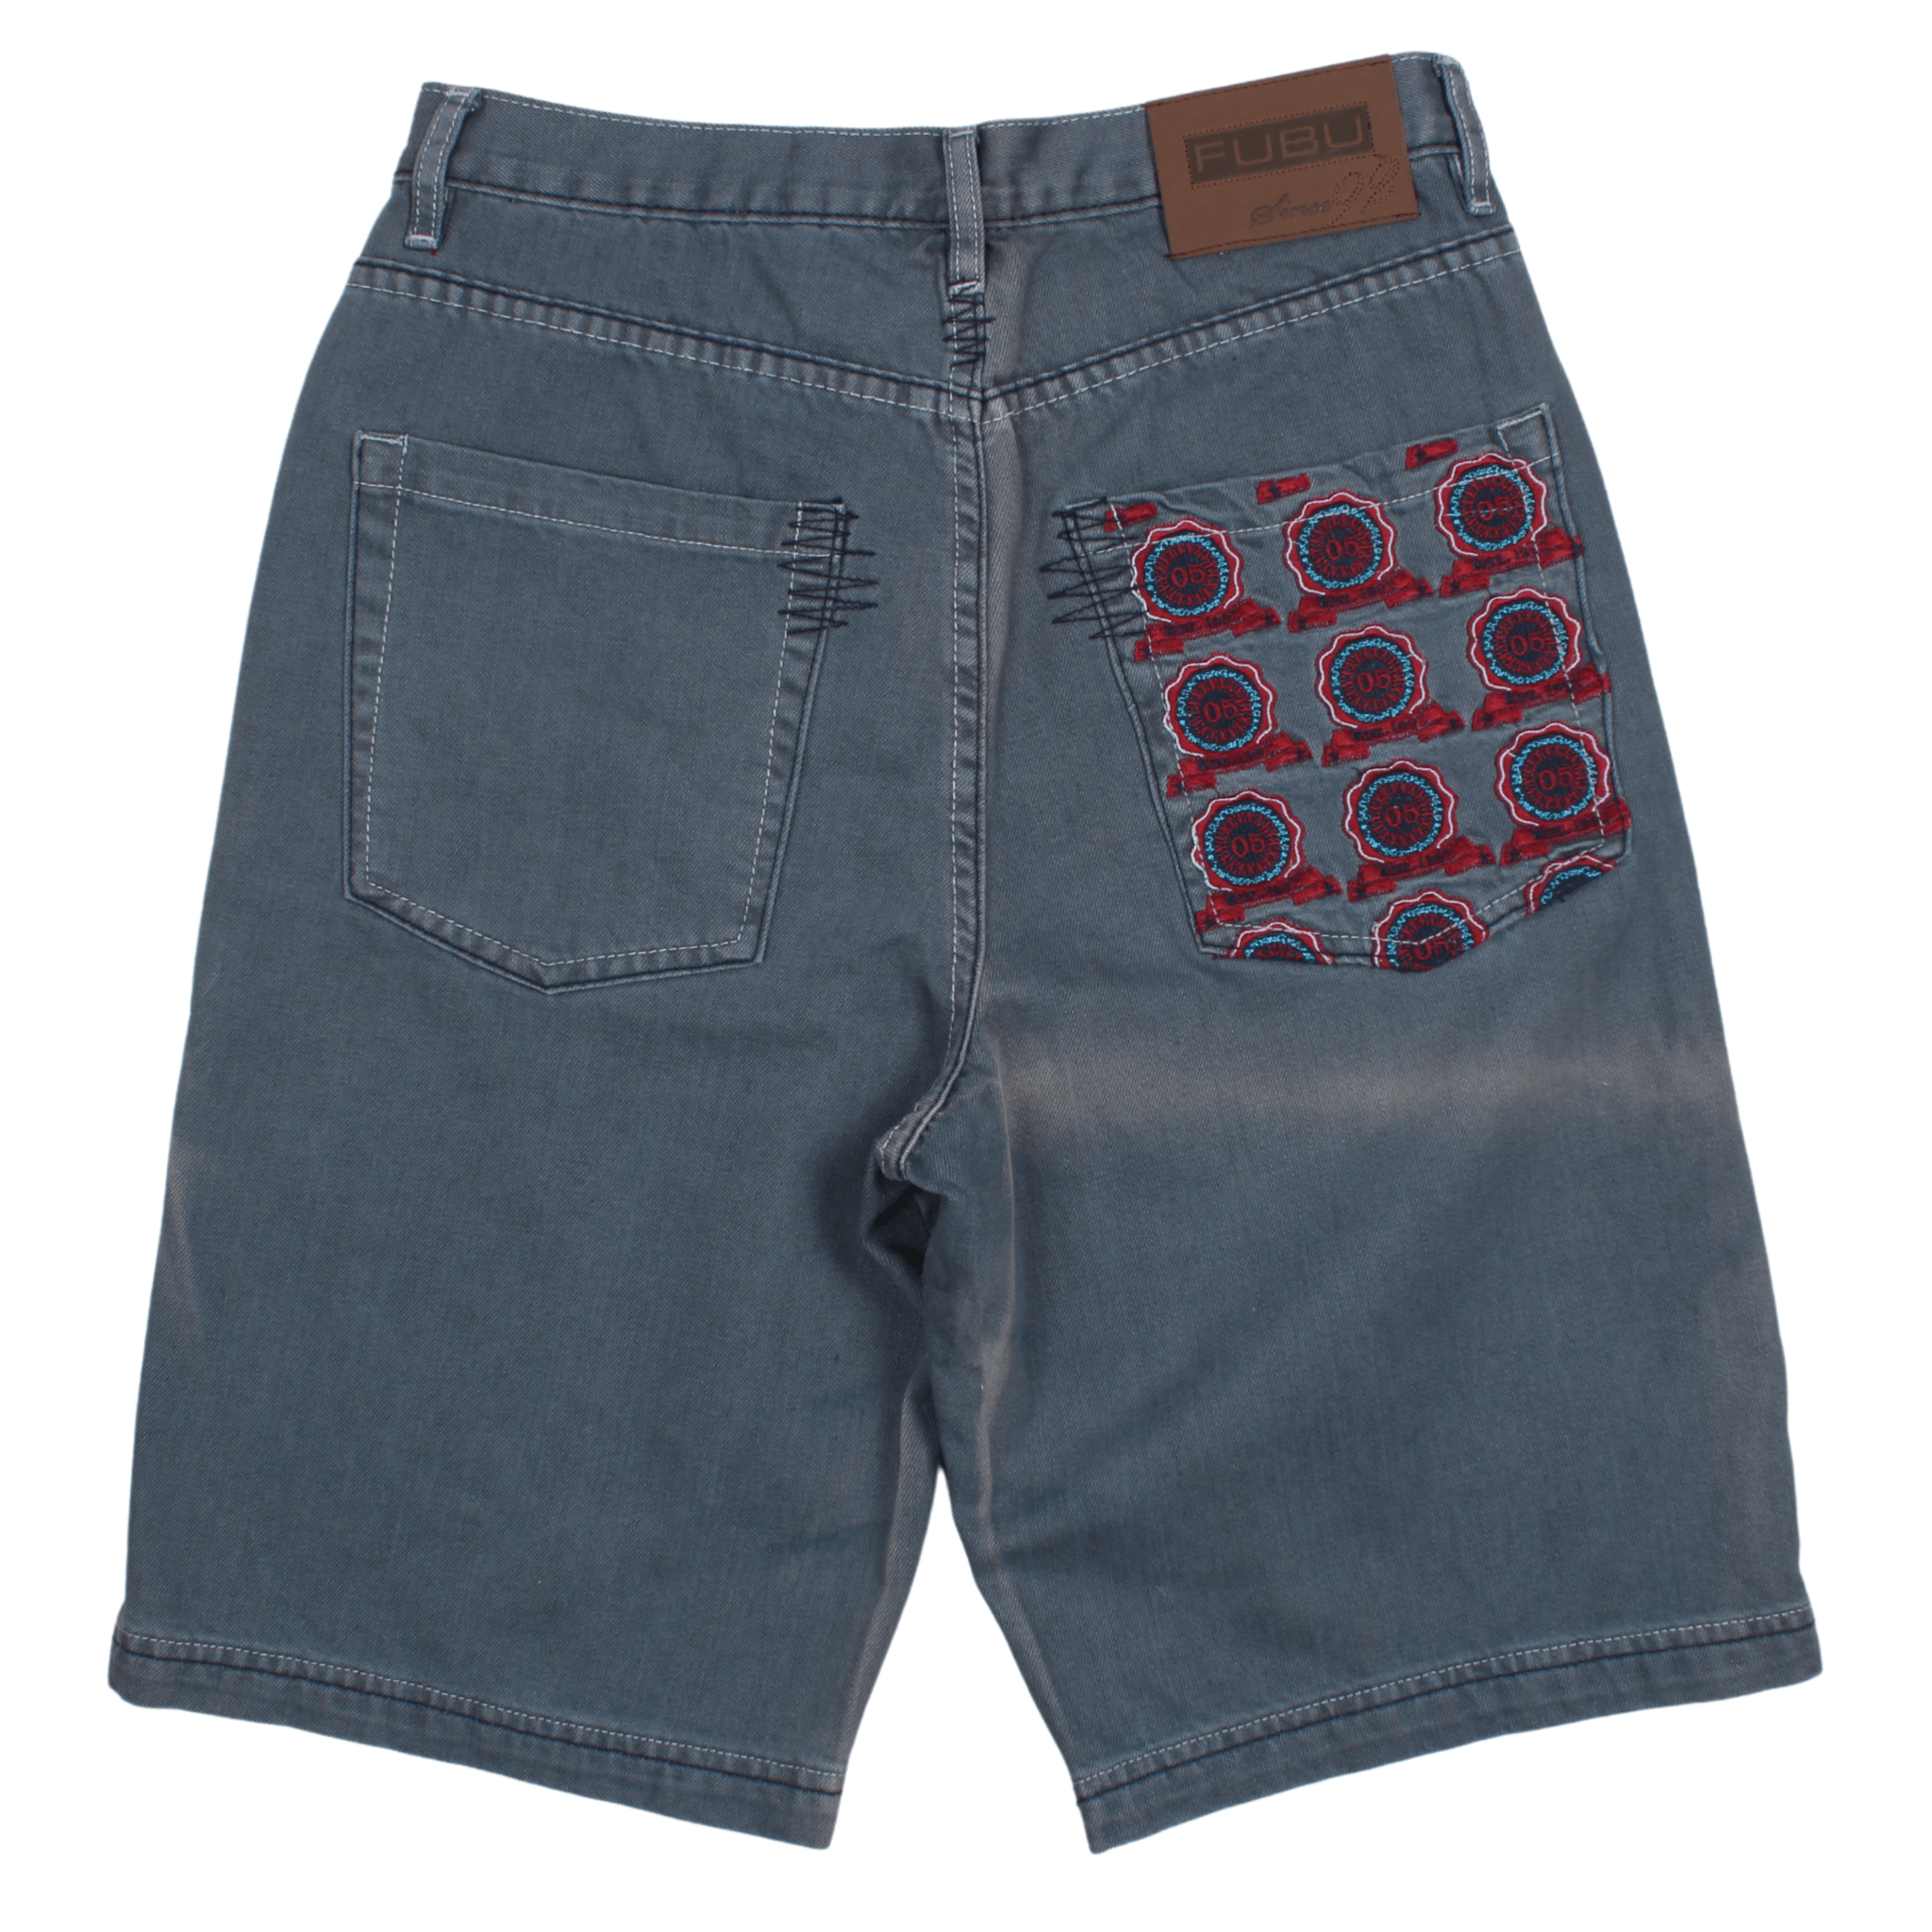 Vintage Fubu Denim Shorts (30